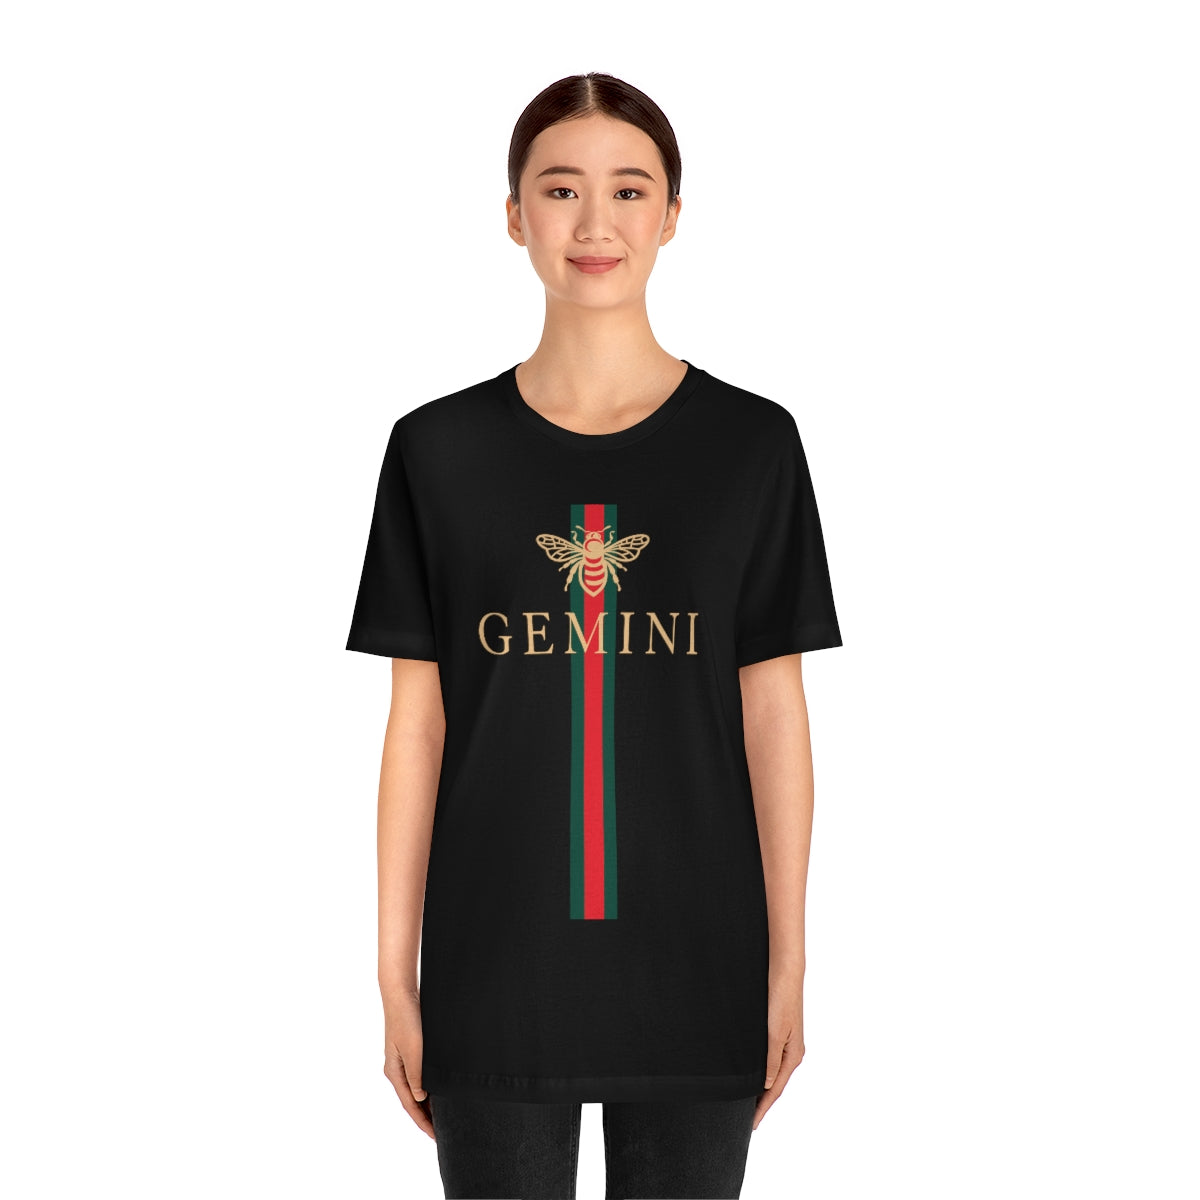 Gemini Bee Girl Shirt